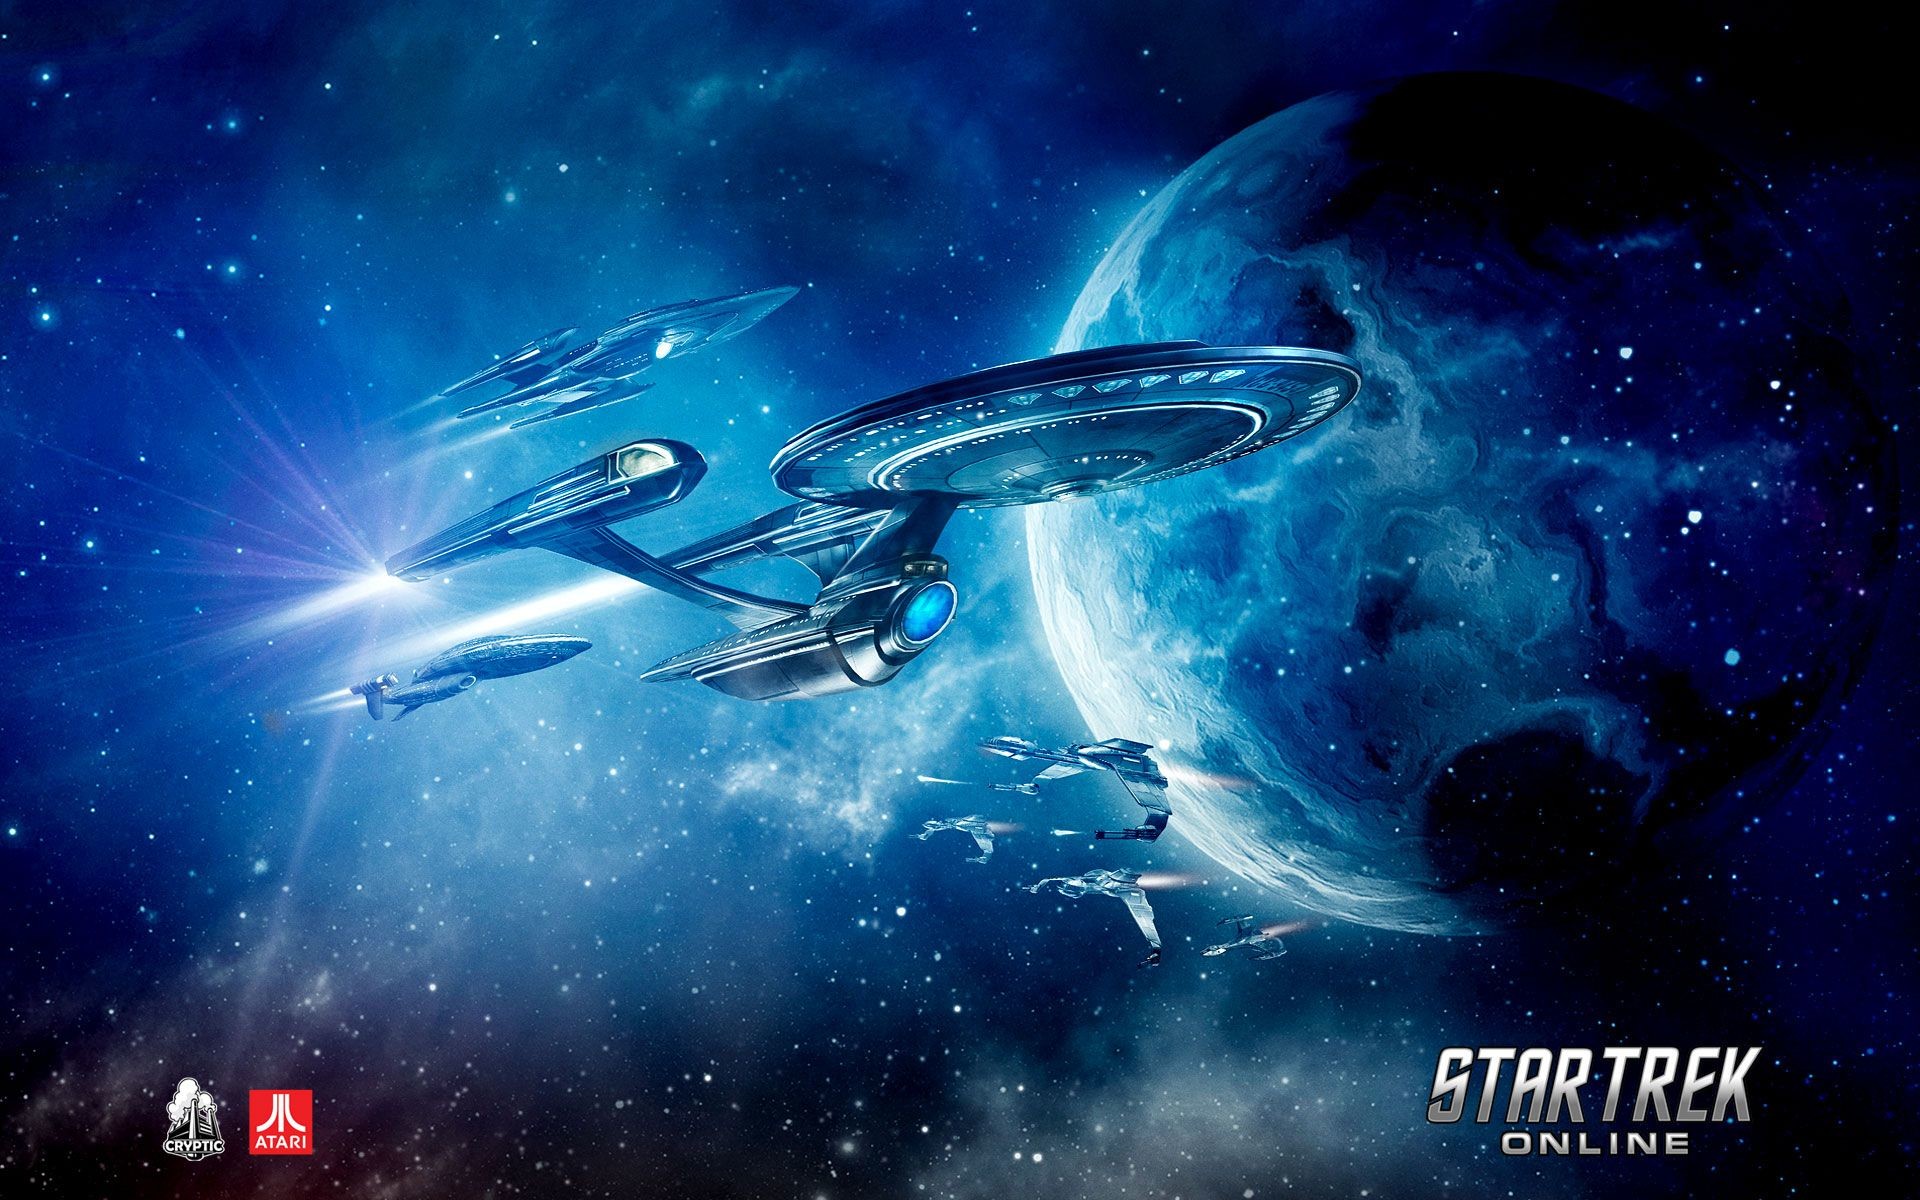 Star Trek Enterprise High Resolution Wallpapers